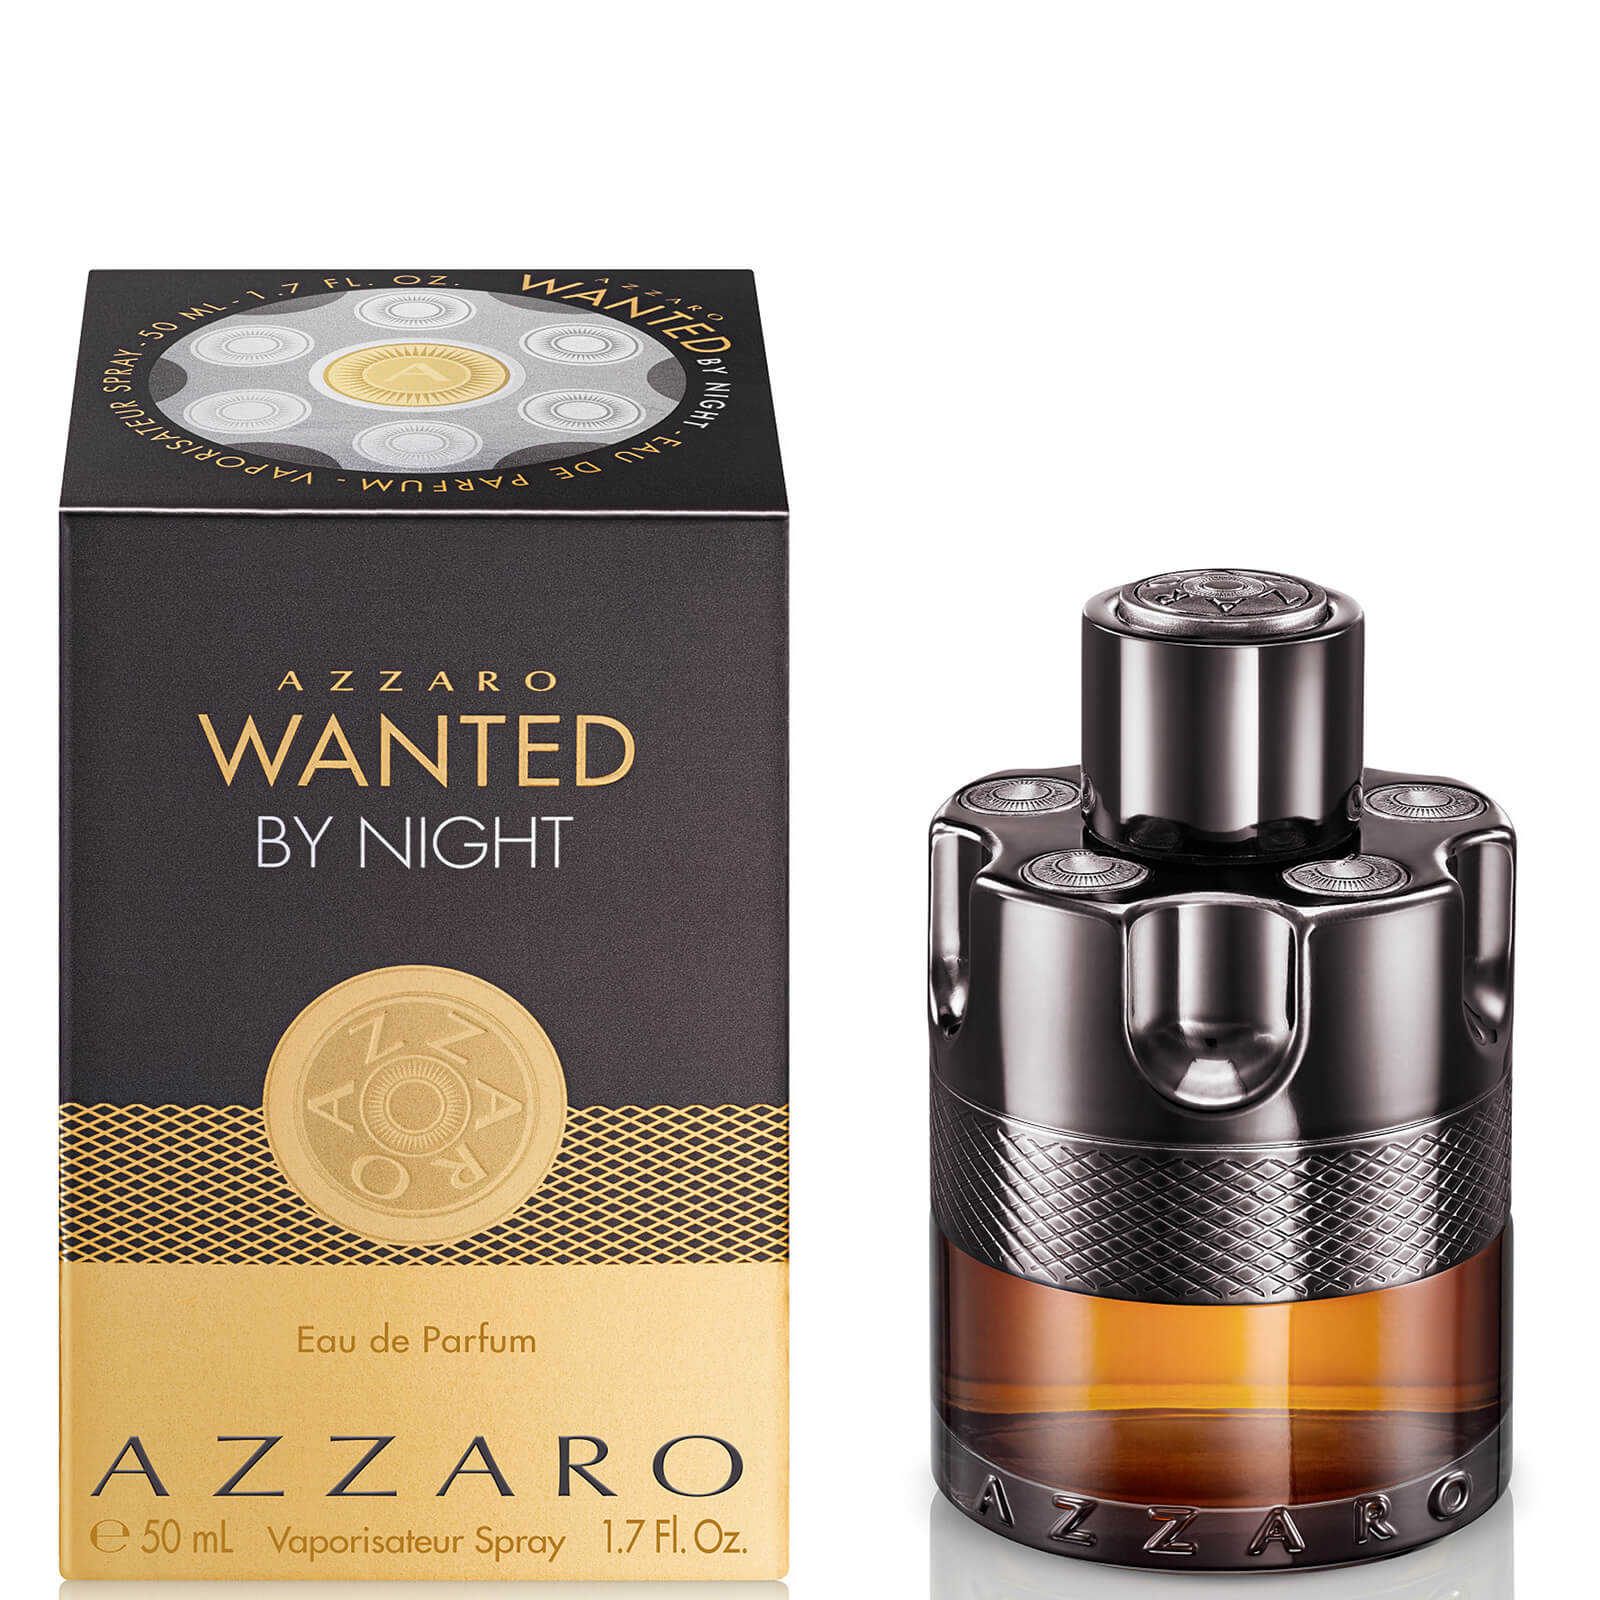 azzaro wanted by night eau de parfum - 50ml donna